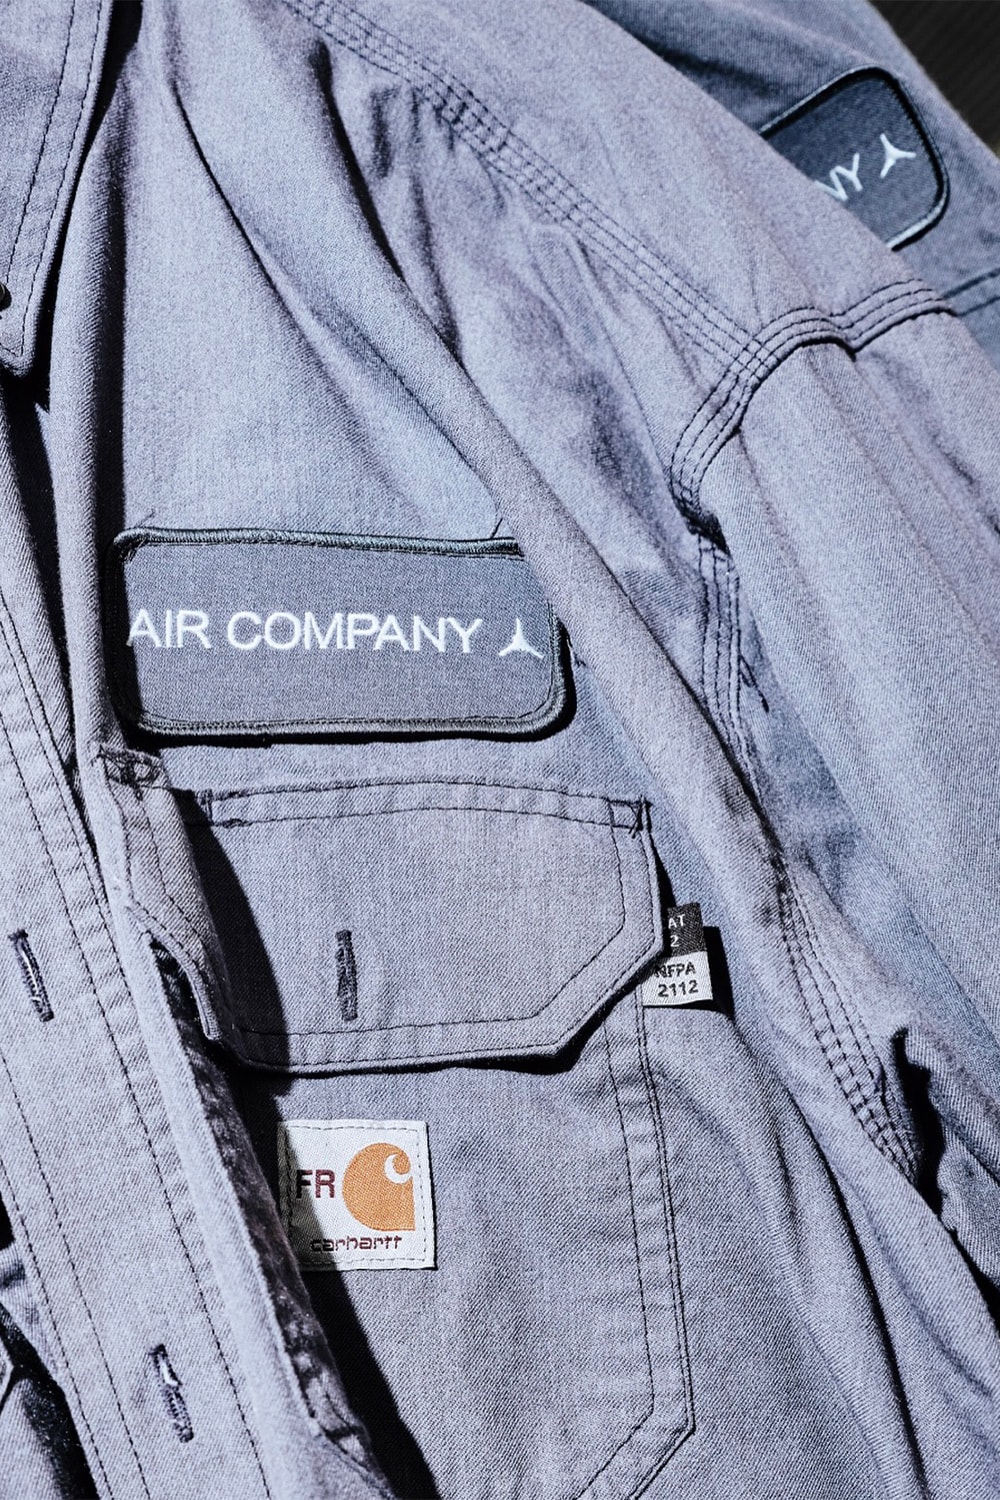 科學單位 Aircompany 曝光飾有 Carhartt Logo 工作服